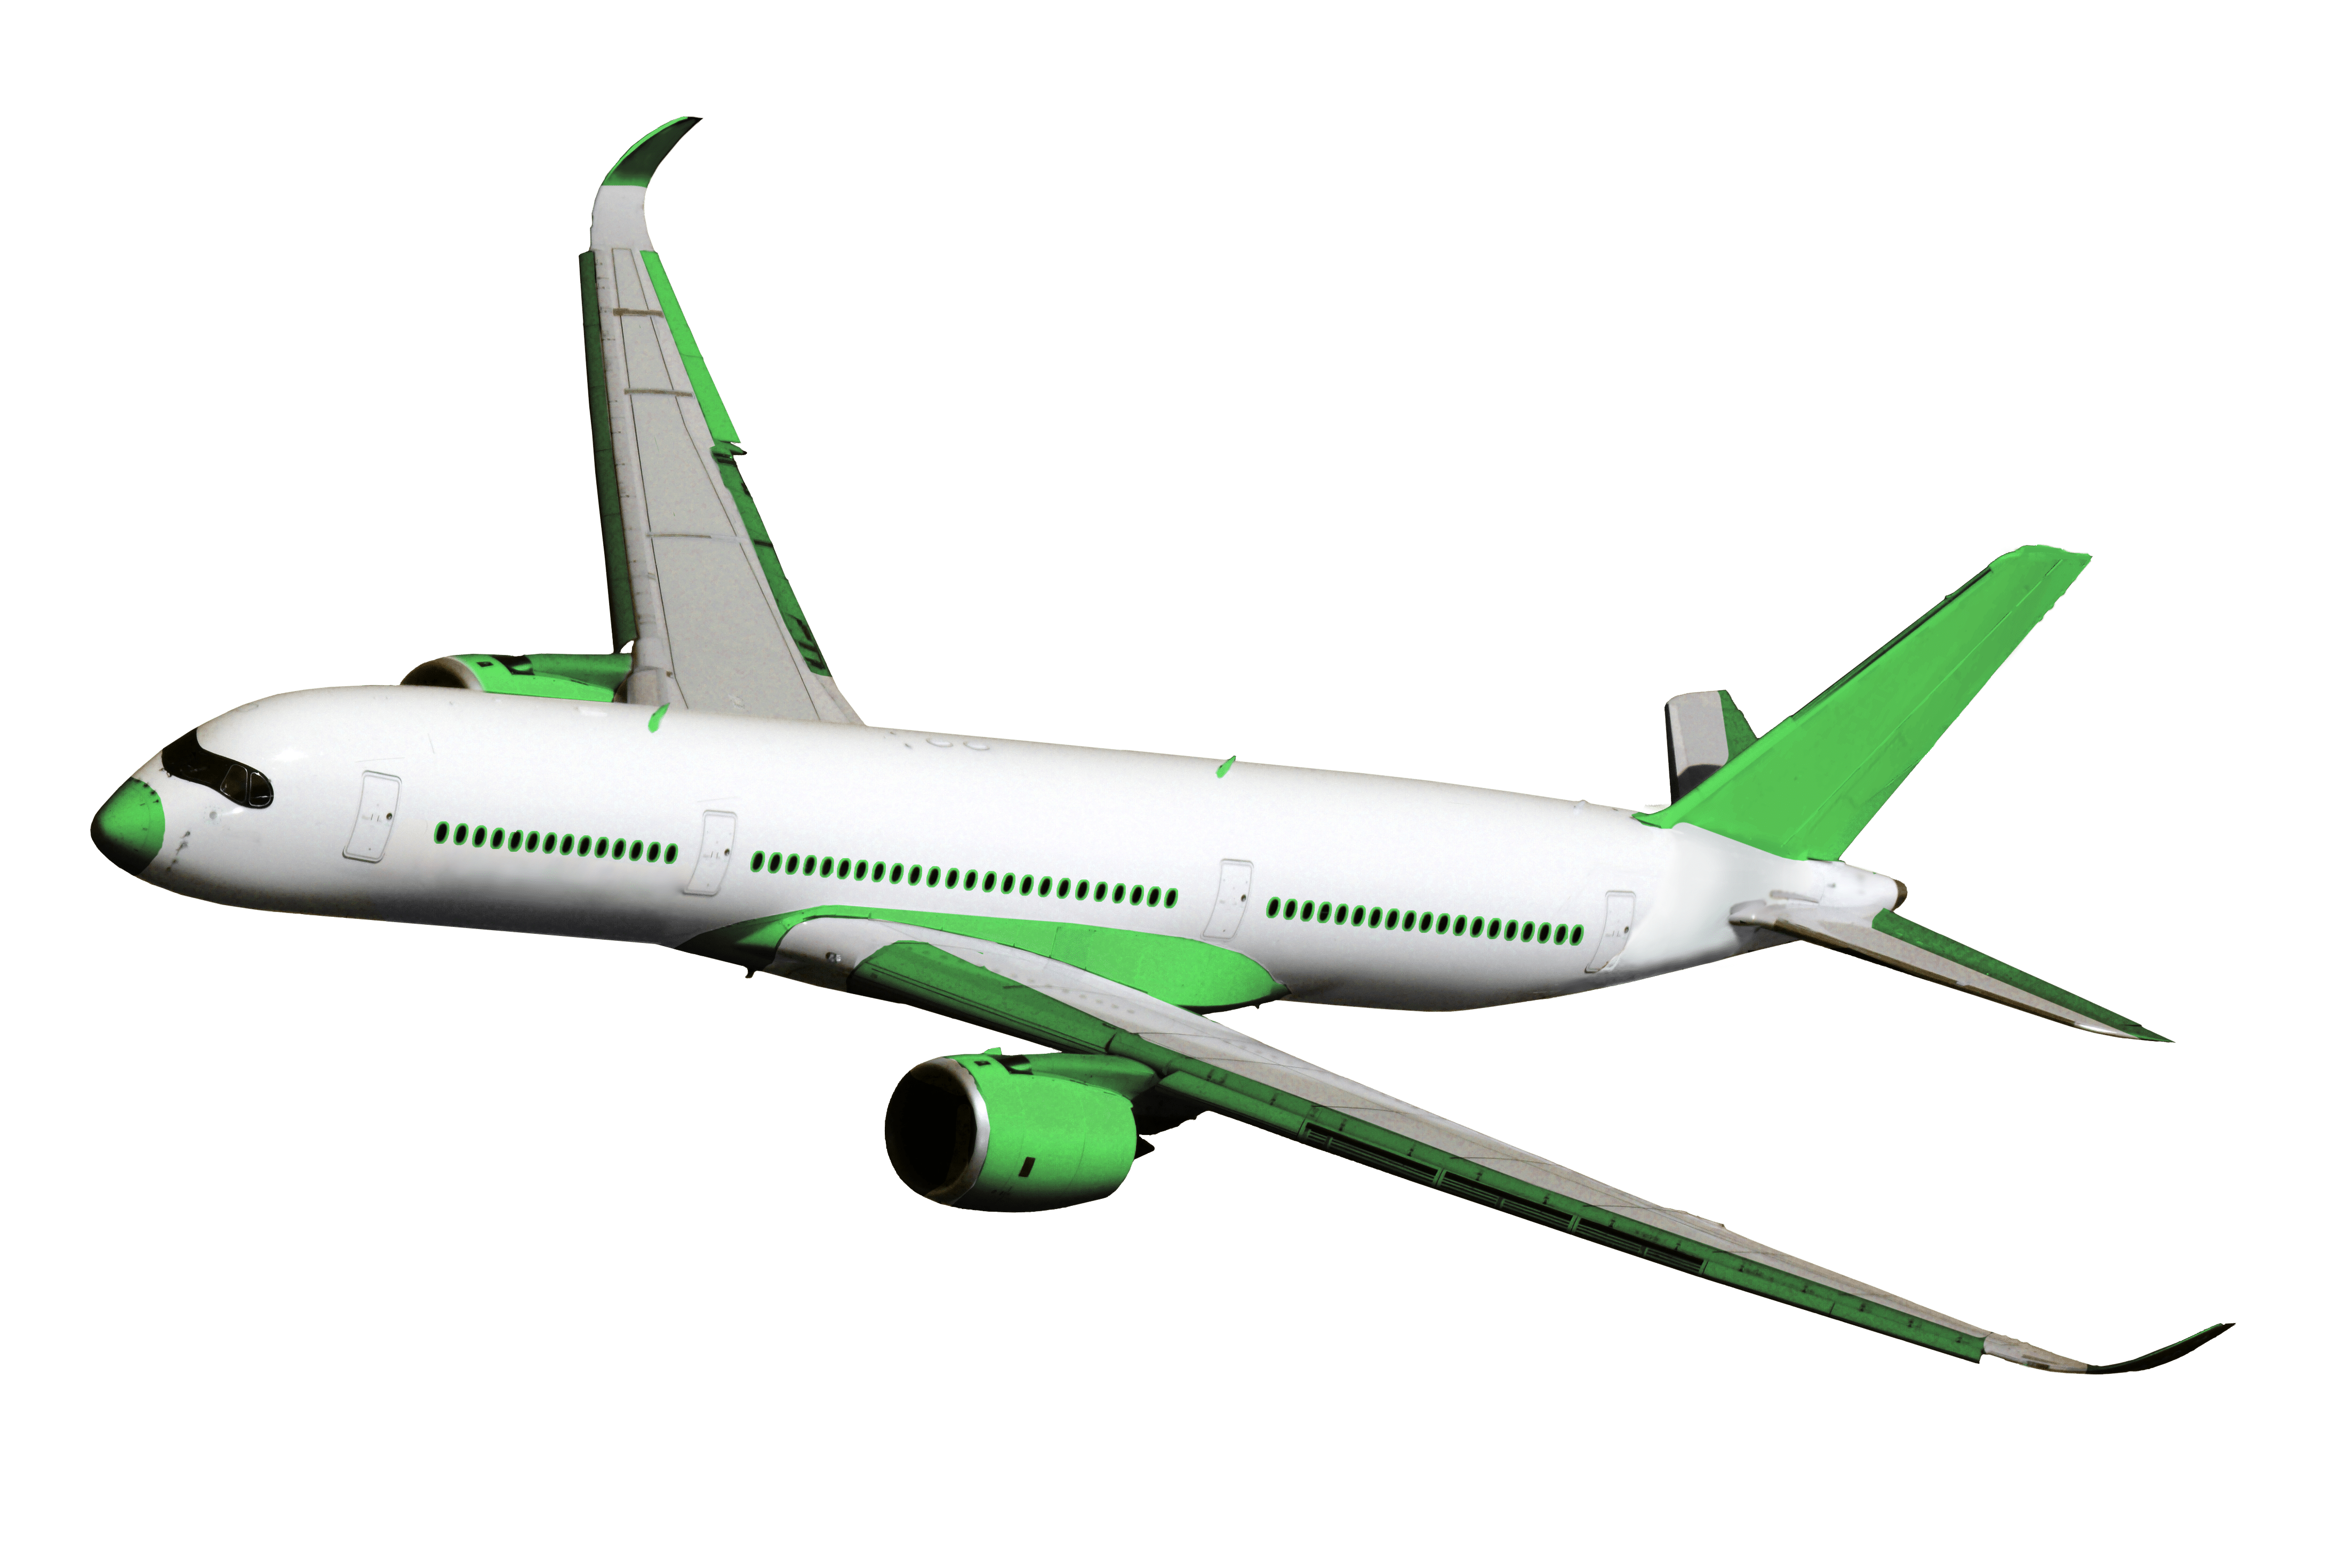 Fiber Patch Placement in Flugzeugstrukturen: Untersuchung zur Materialäquivalenz